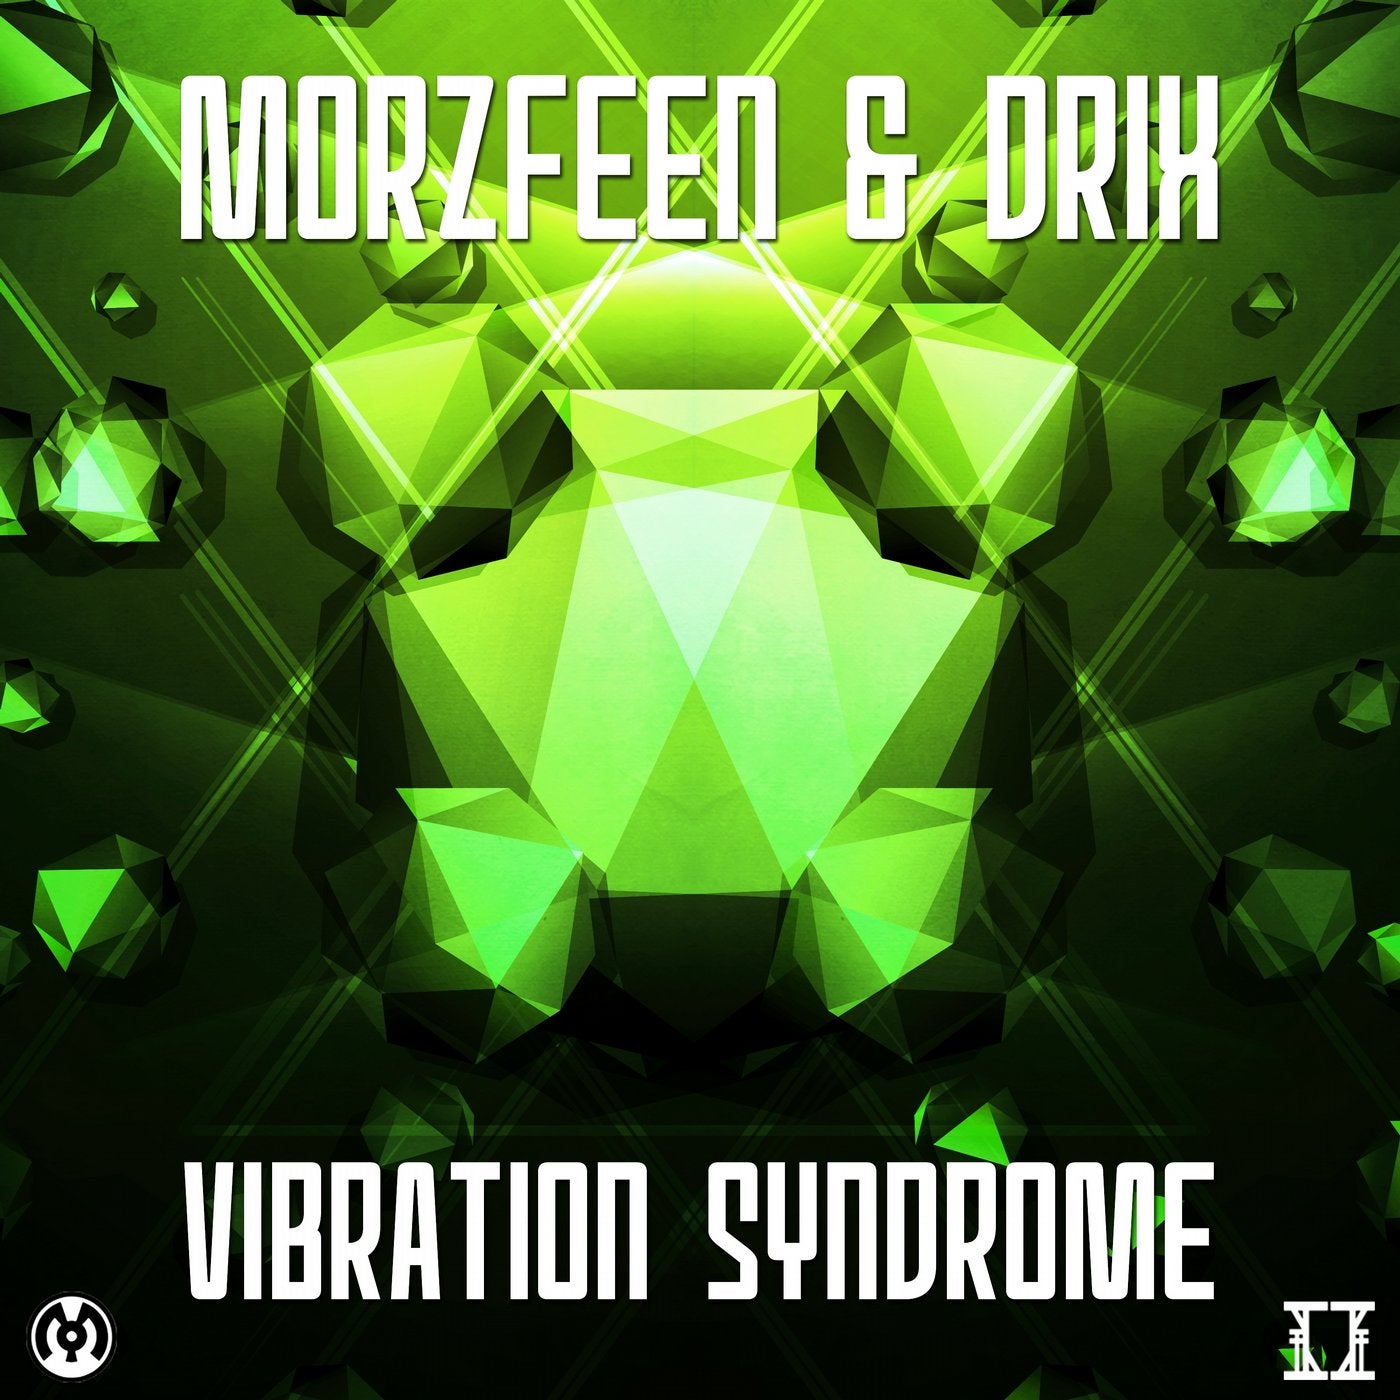 Vibration Syndrome - EP